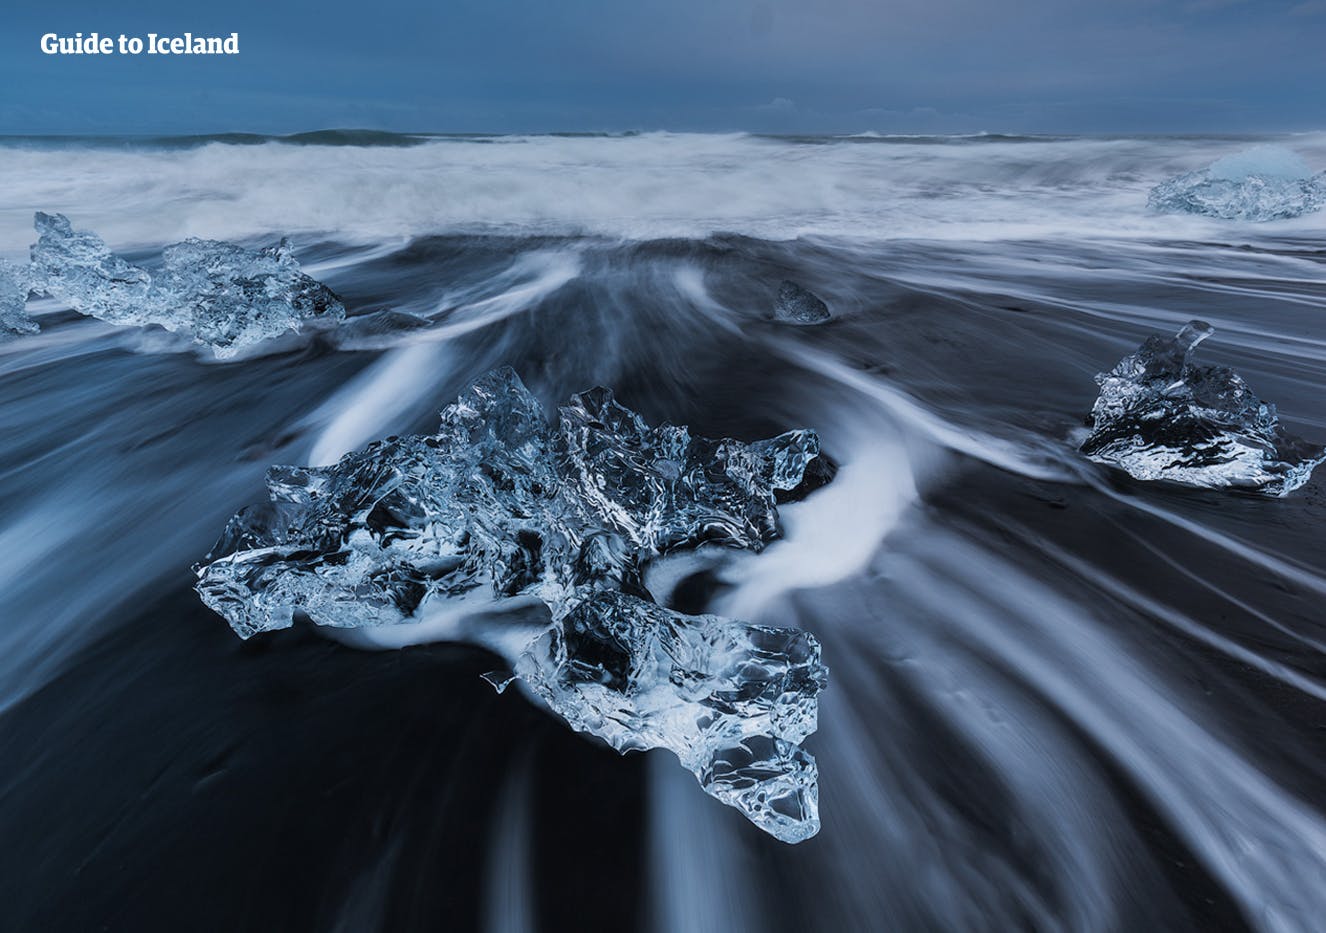 The Diamond Beach by Jökulsárlón glacier lagoon is one of Iceland's most beautiful beaches.